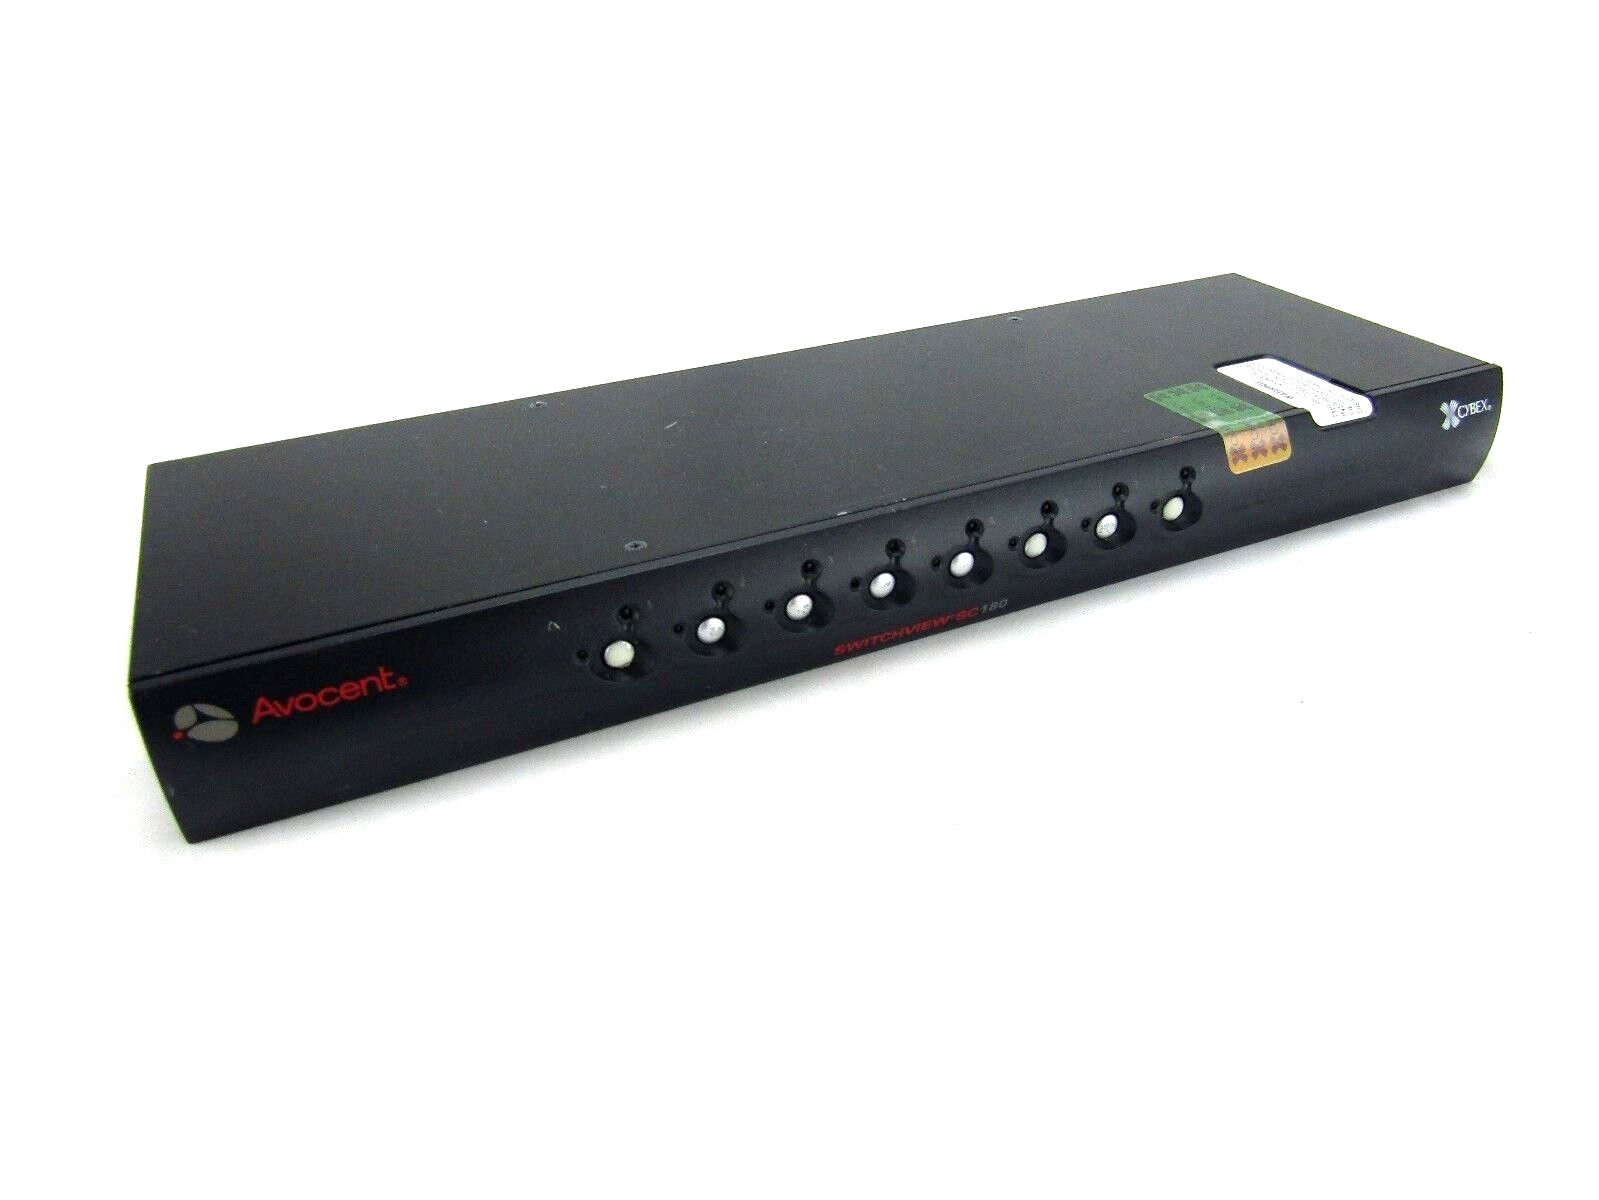 Avocent SwitchView SC180 - KVM / USB switch - 8 ports